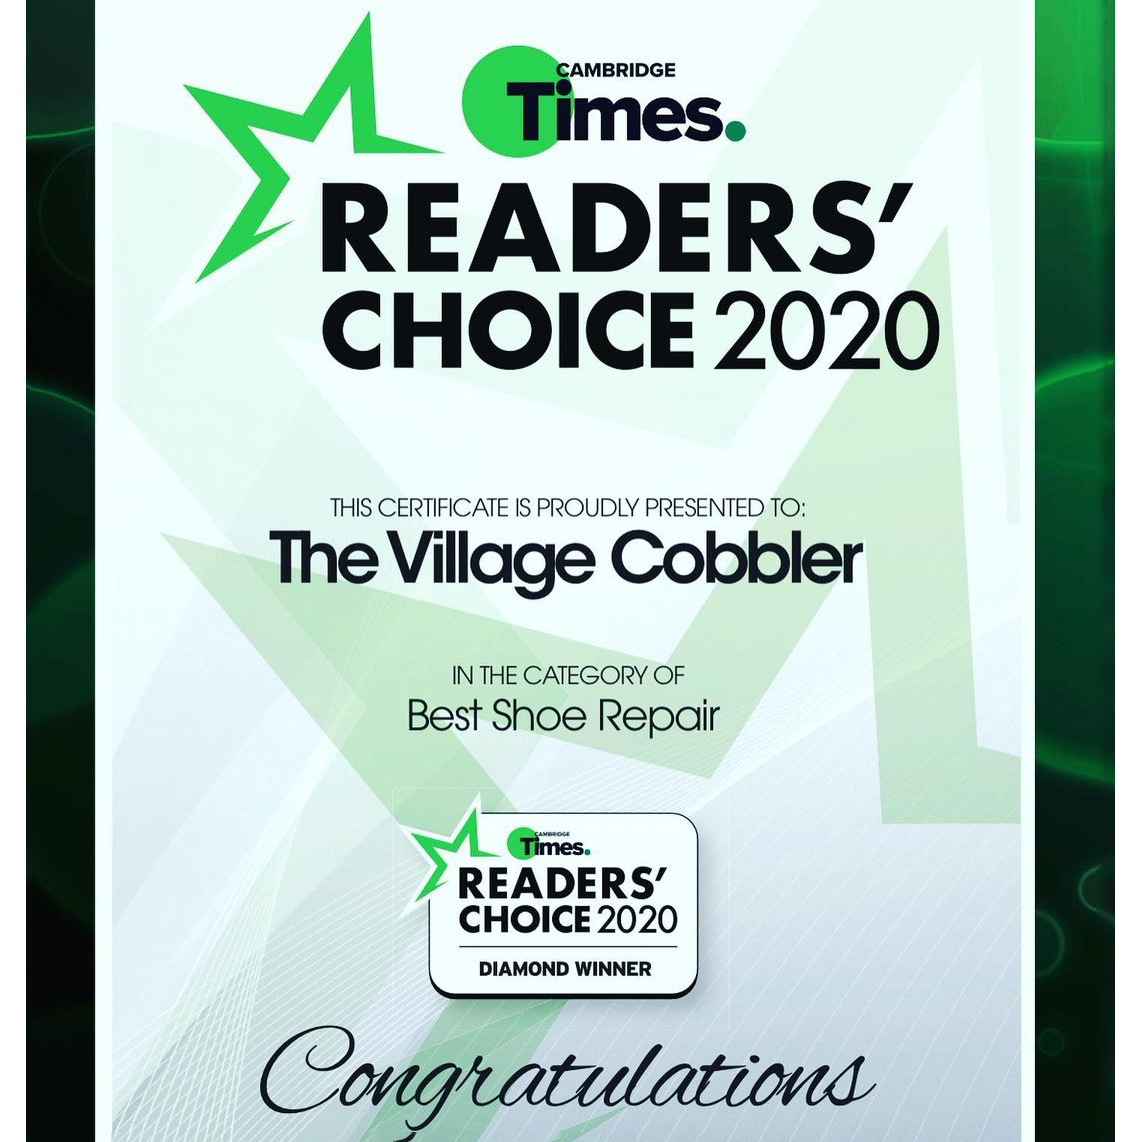 Cambridge readers choice award 2020 image award for #1 shoe repair company